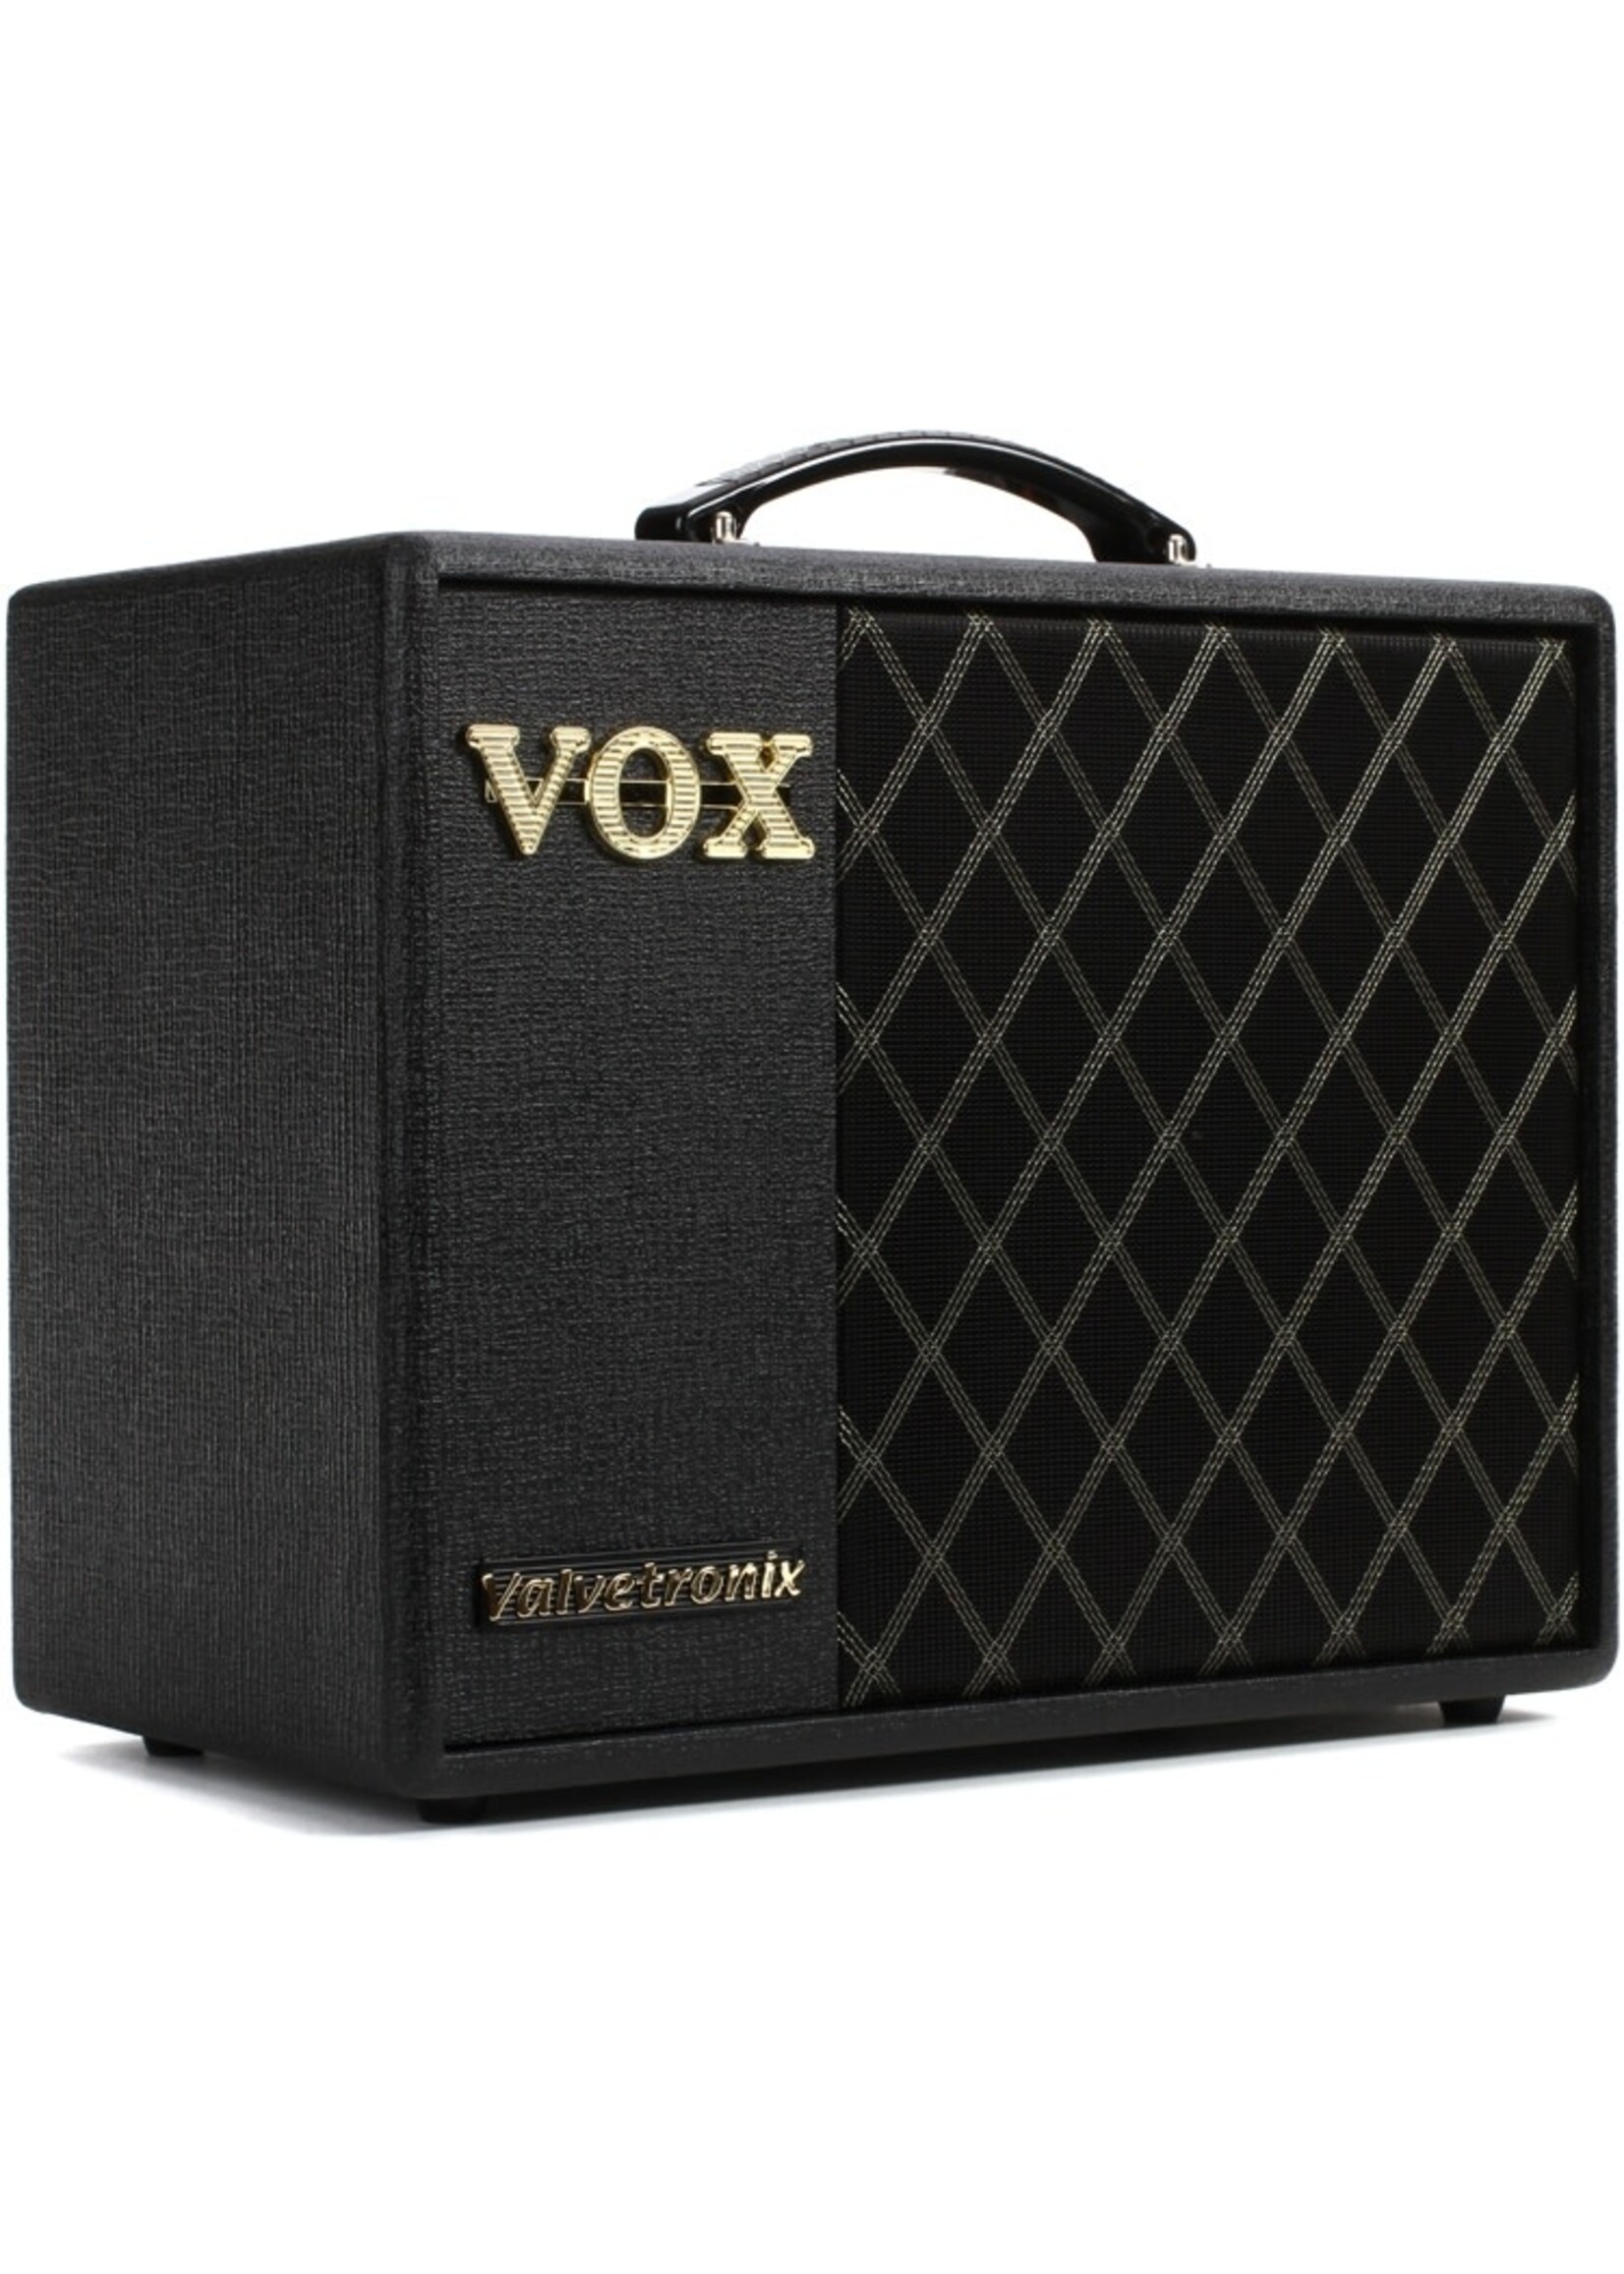 Vox Vox Amplifier Modeling Electric Valvetronix VT20X